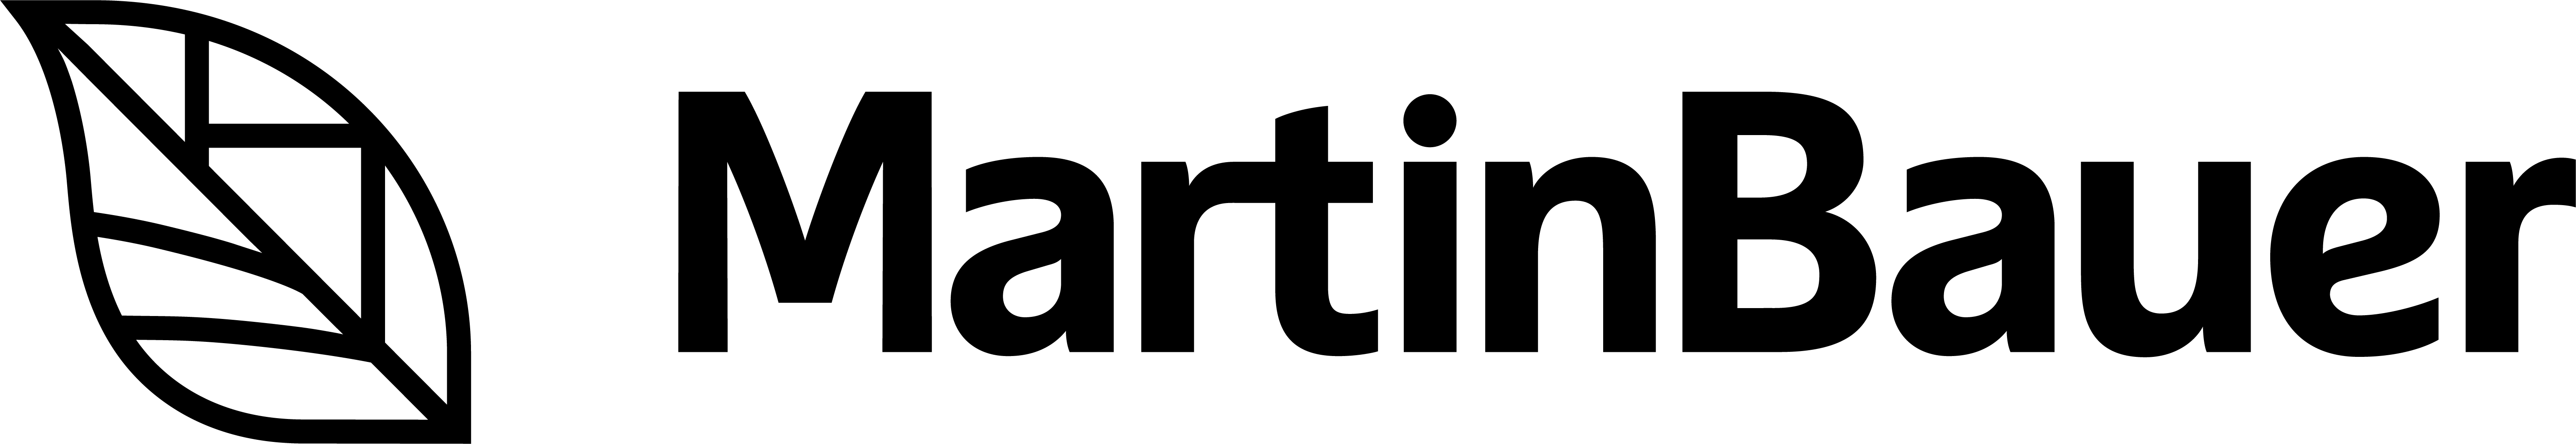 Martin Bauer USA, formally BI Nutraceuticals logo